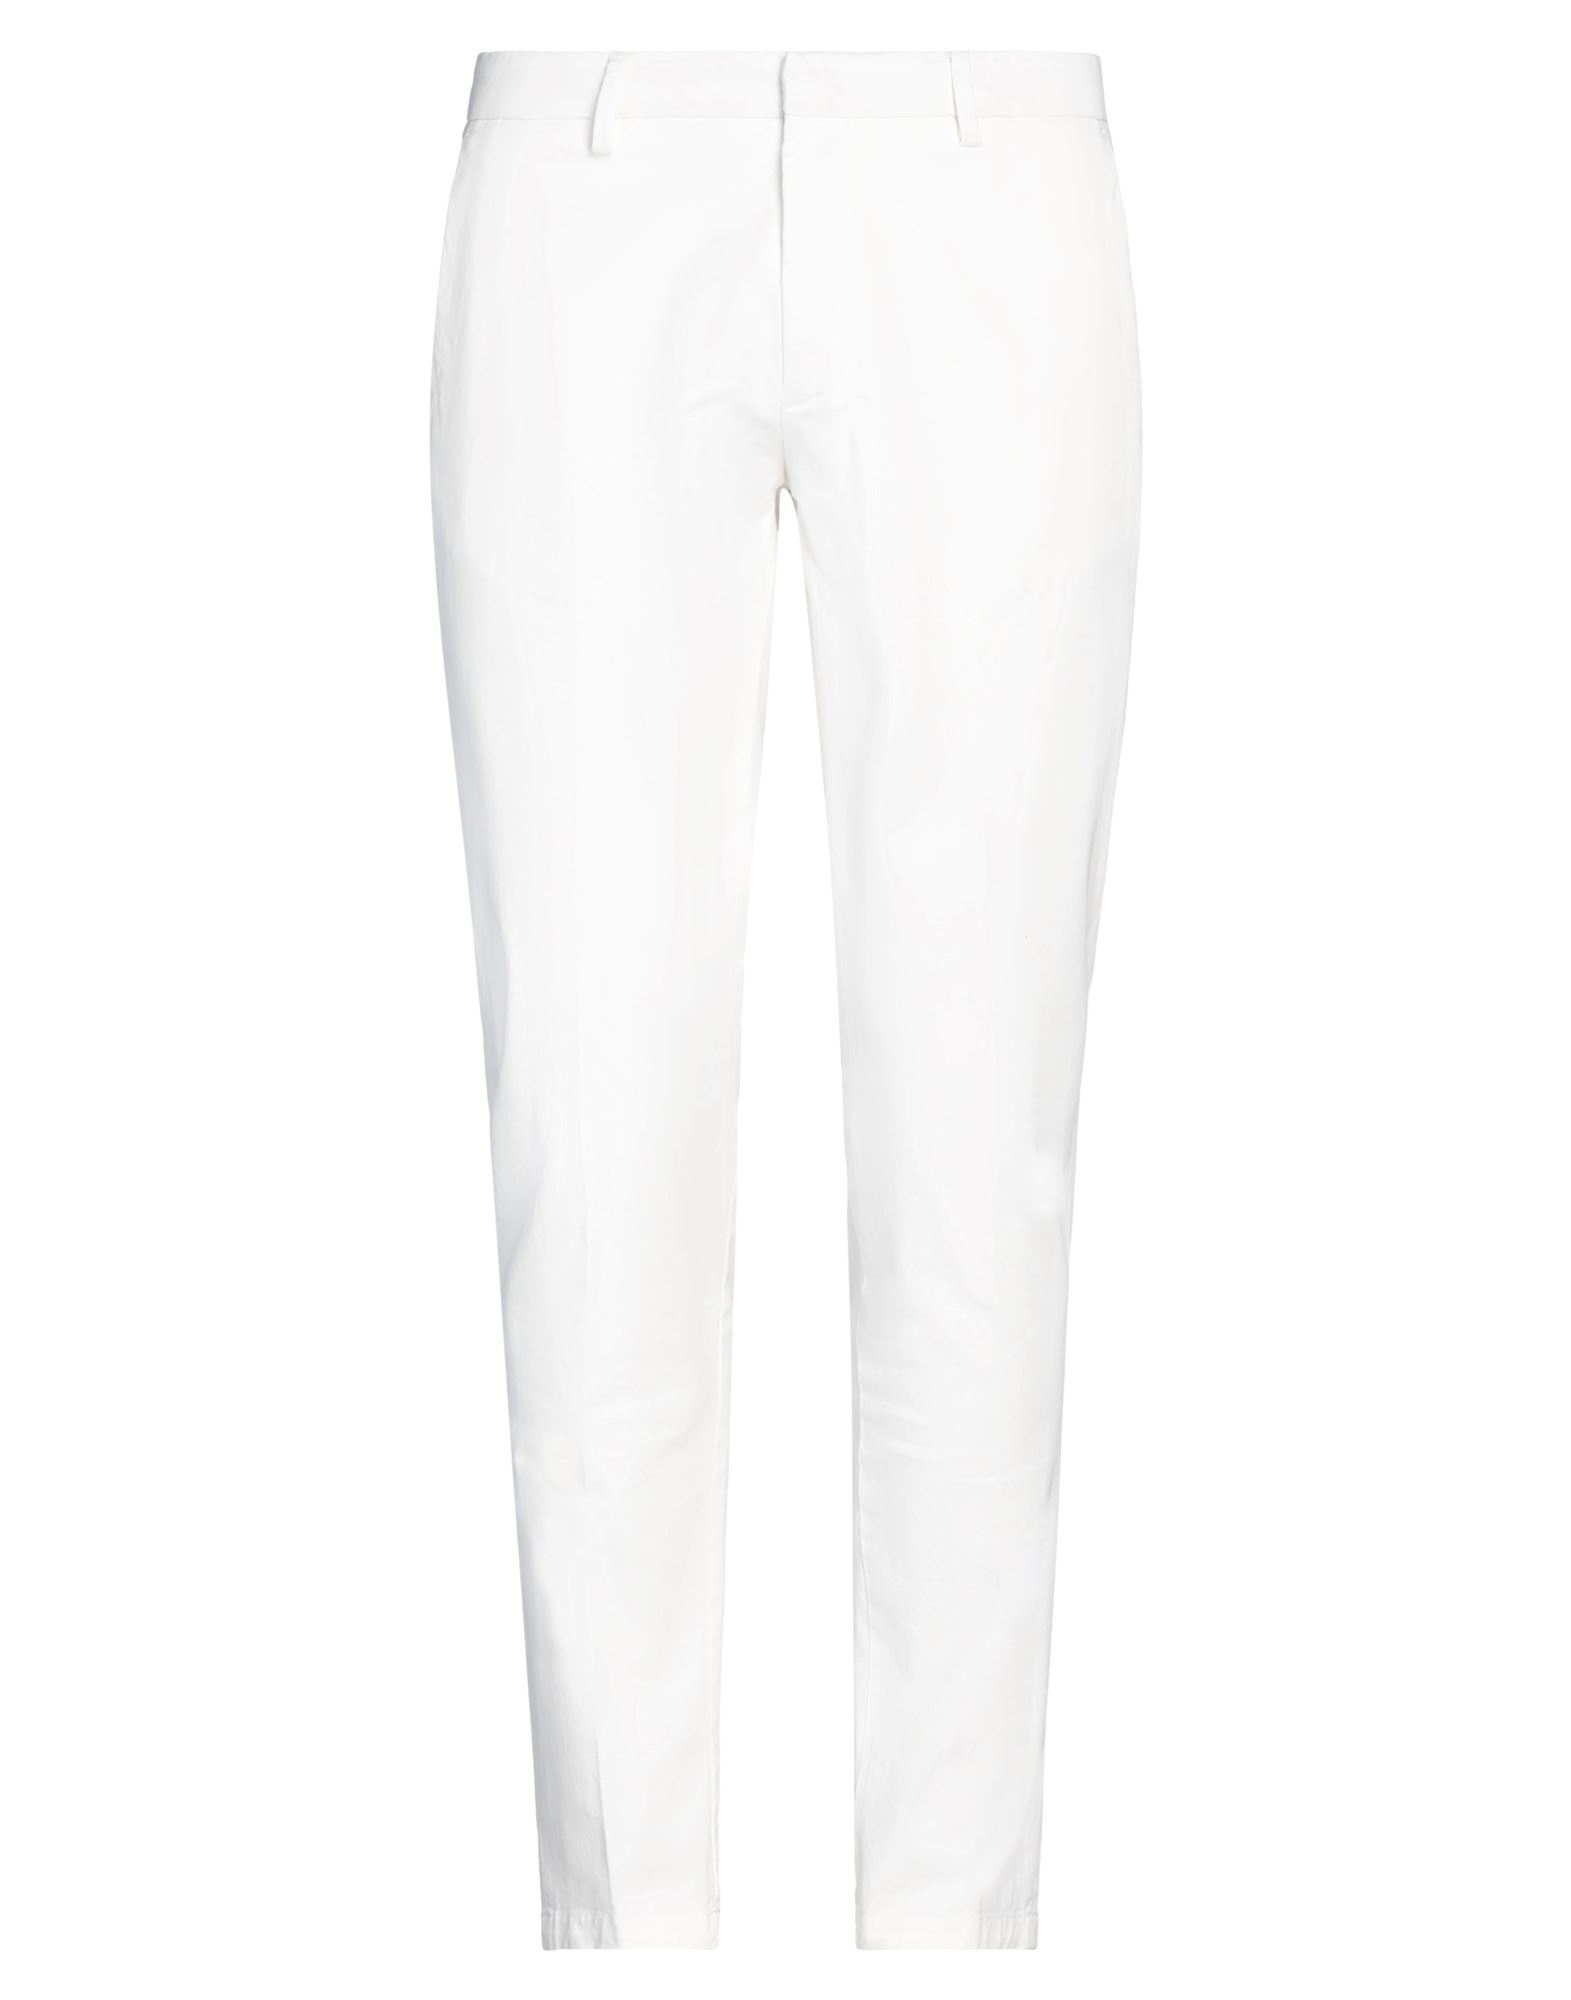 Gazzarrini Pants In White